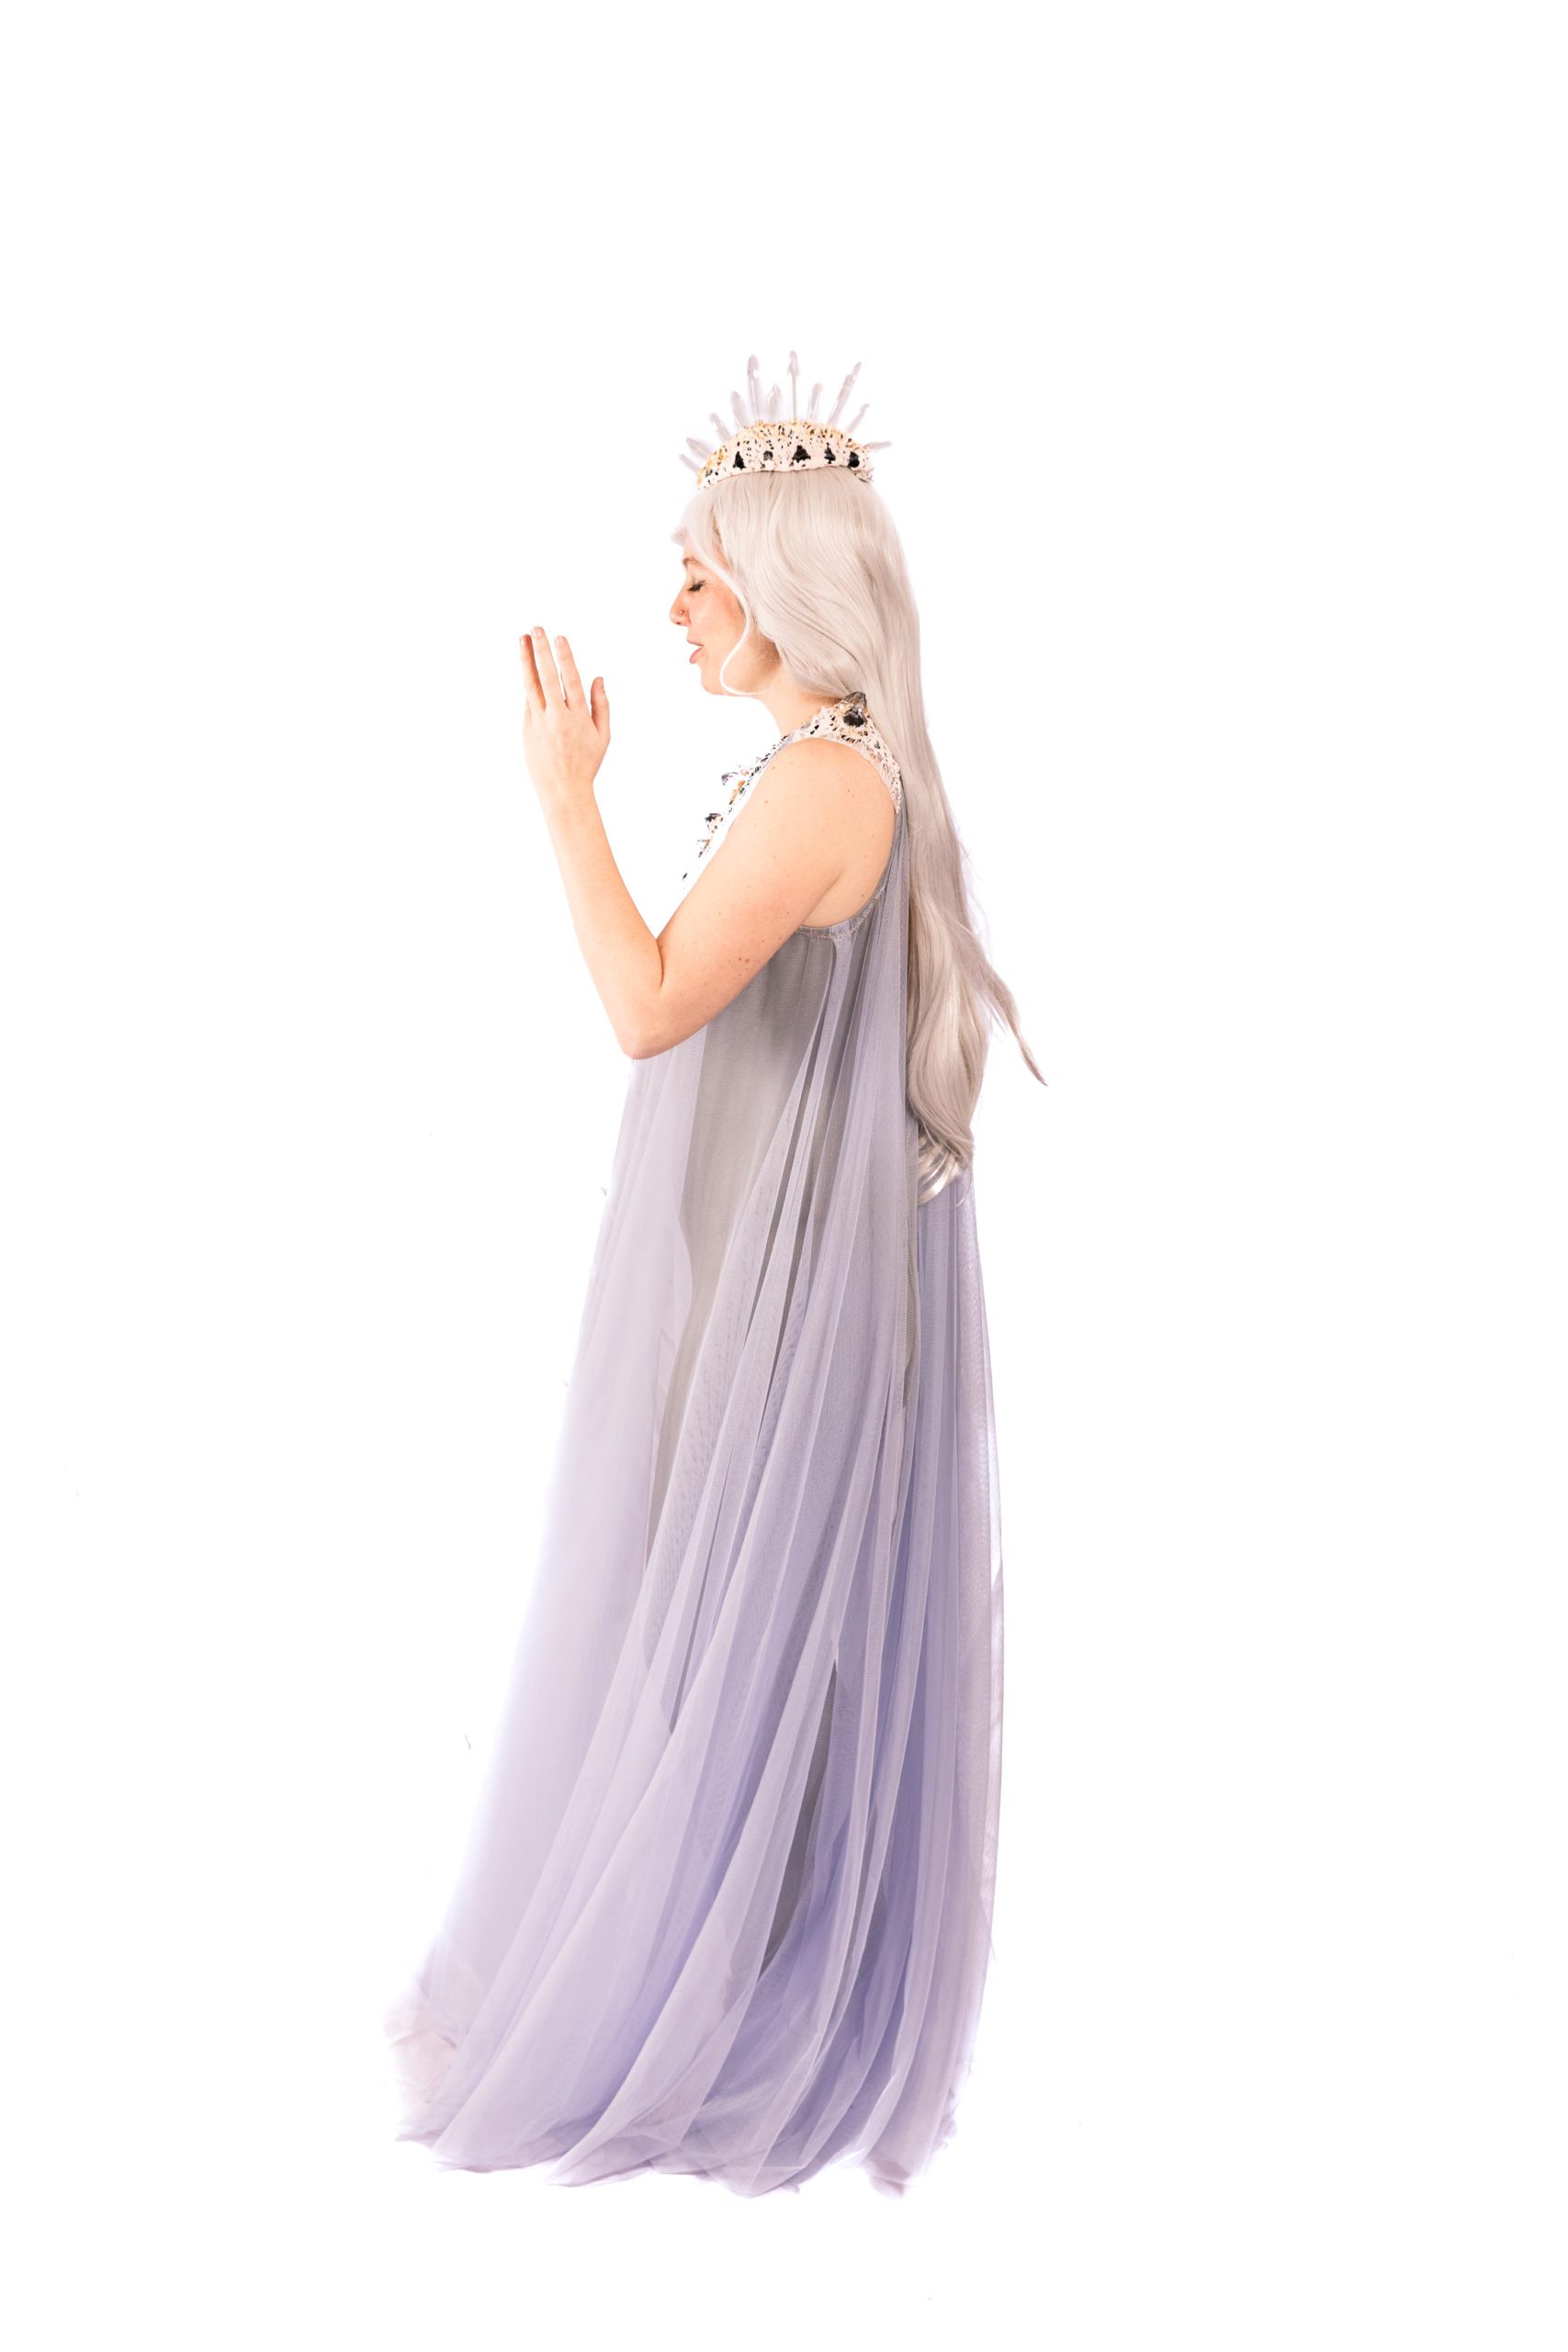 Crystal Fairy Queen